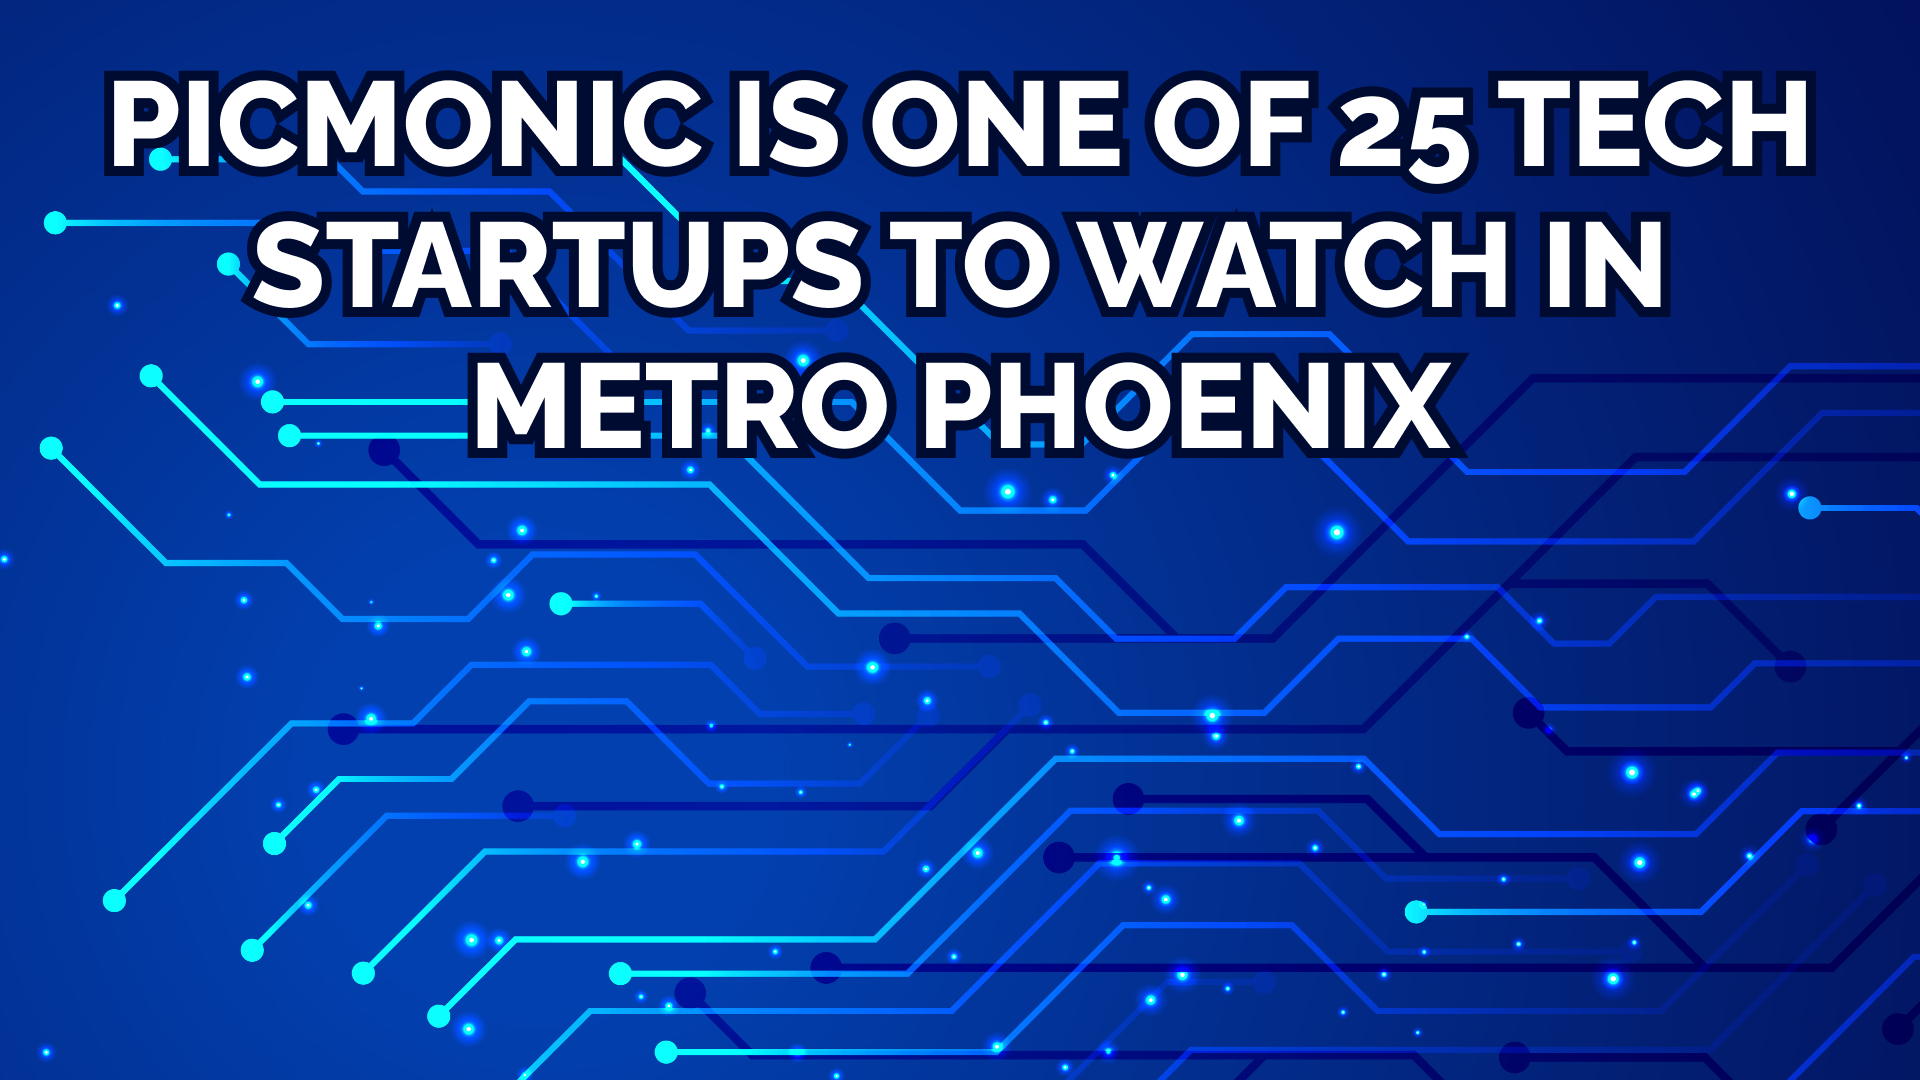 Picmonic is One of 25 Tech Startups to Watch in Metro Phoenix